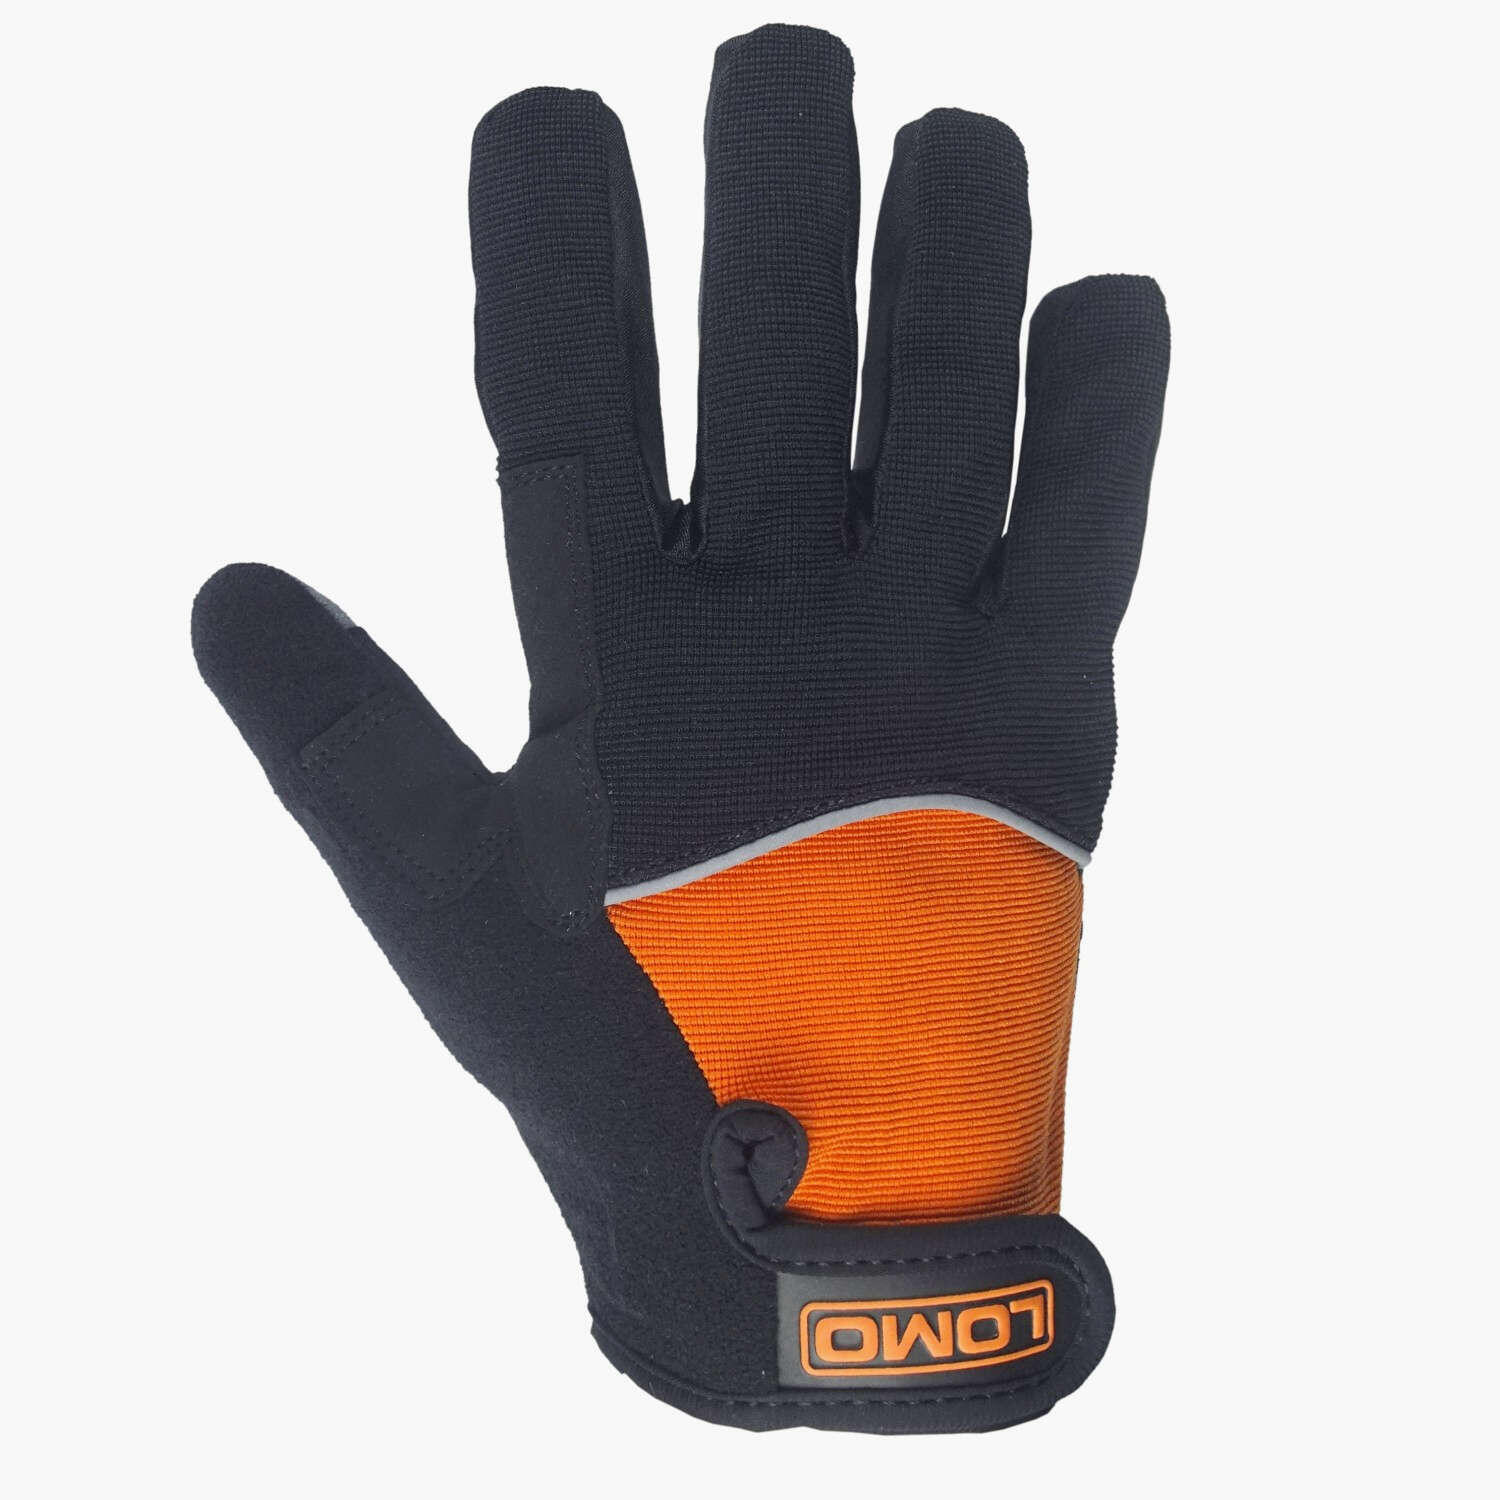 Lomo Mountain Bike Gloves - Black / Grey / Orange 2/8